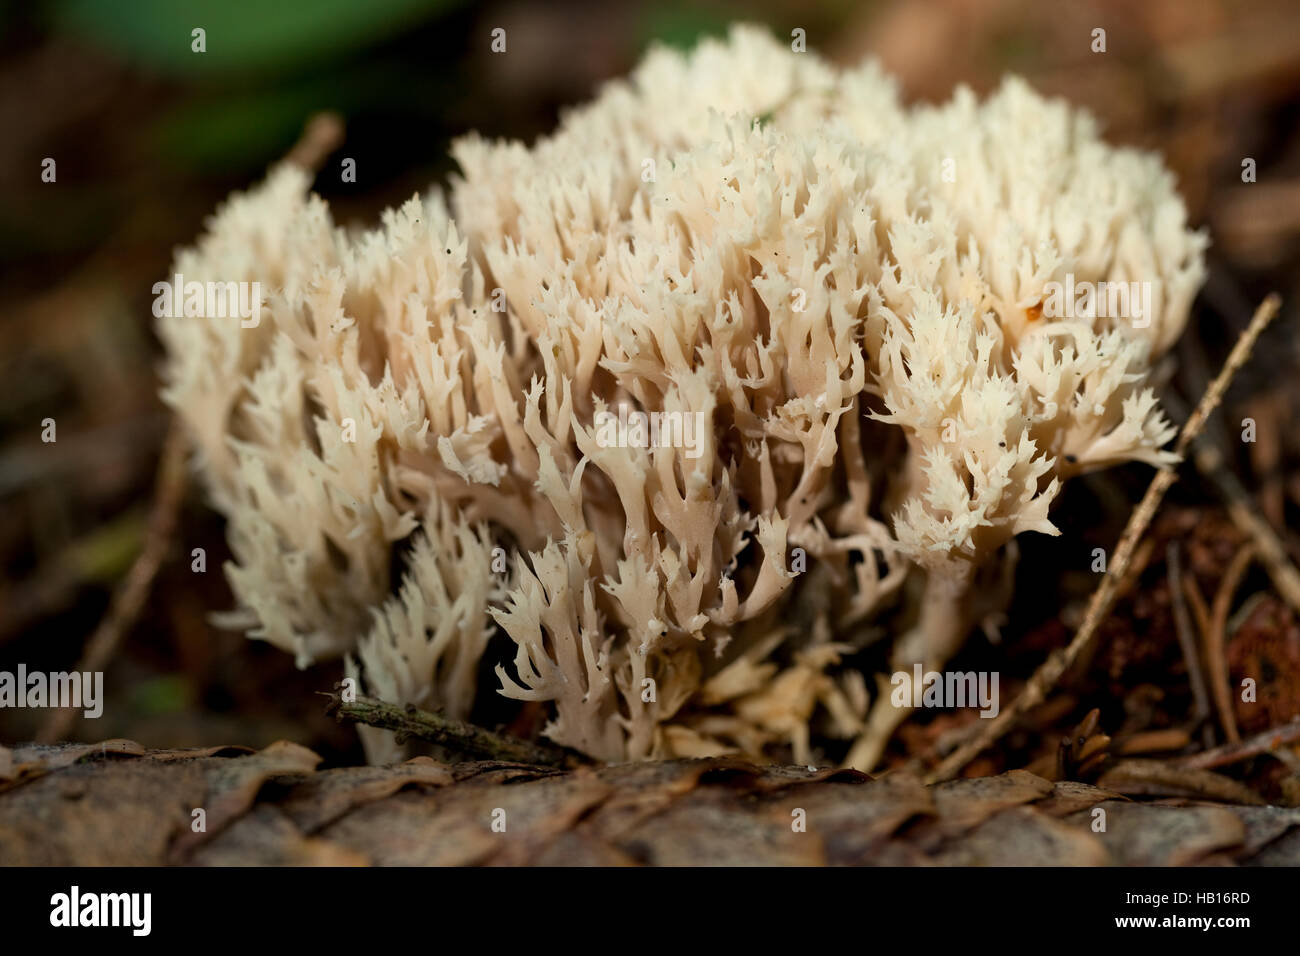 Coral hongo comestible (Ramaria stricta) en hoja seca Foto de stock